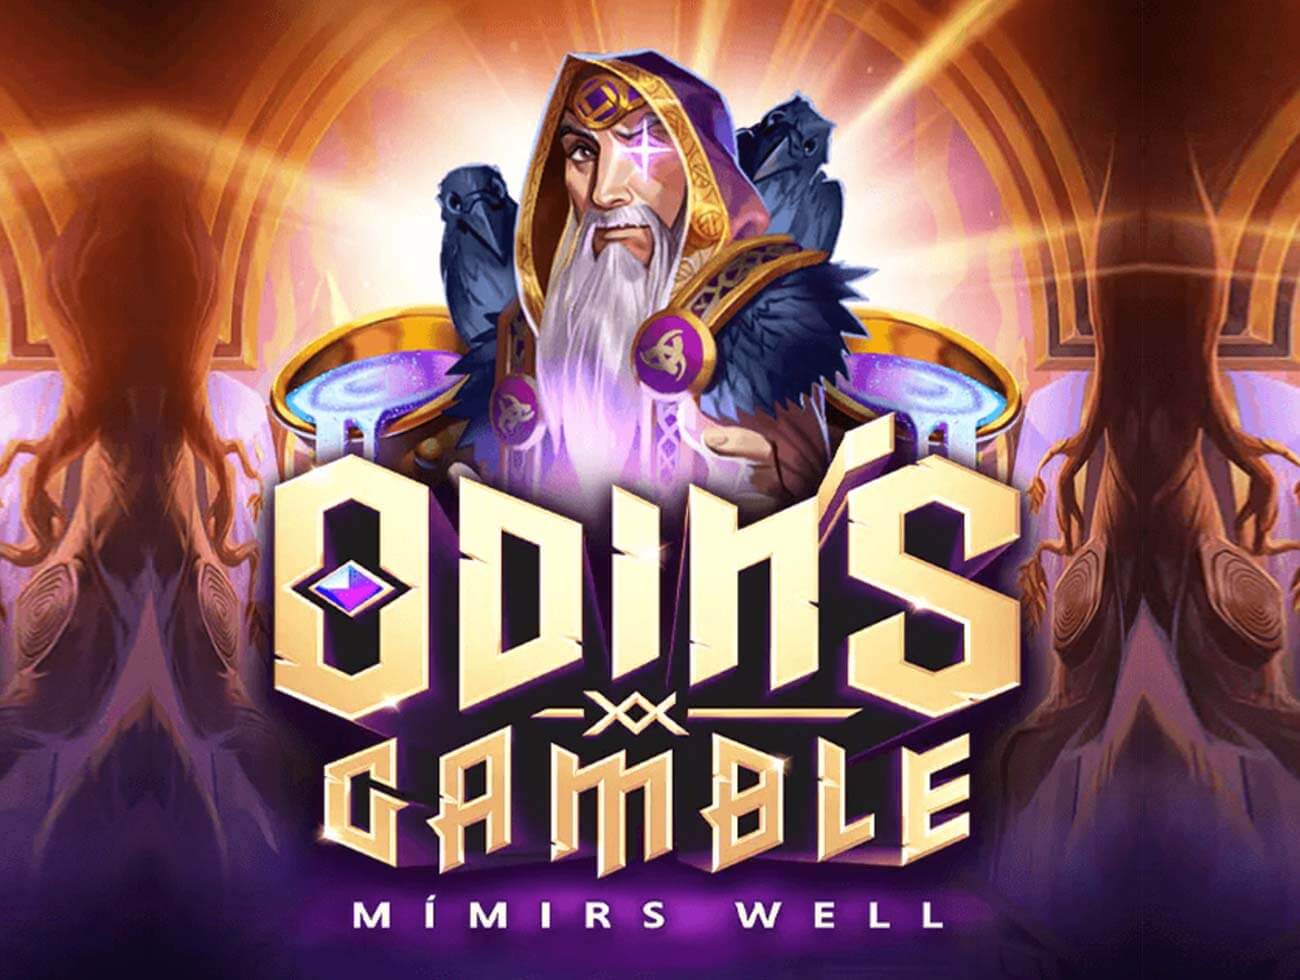 Odin’s Gamble